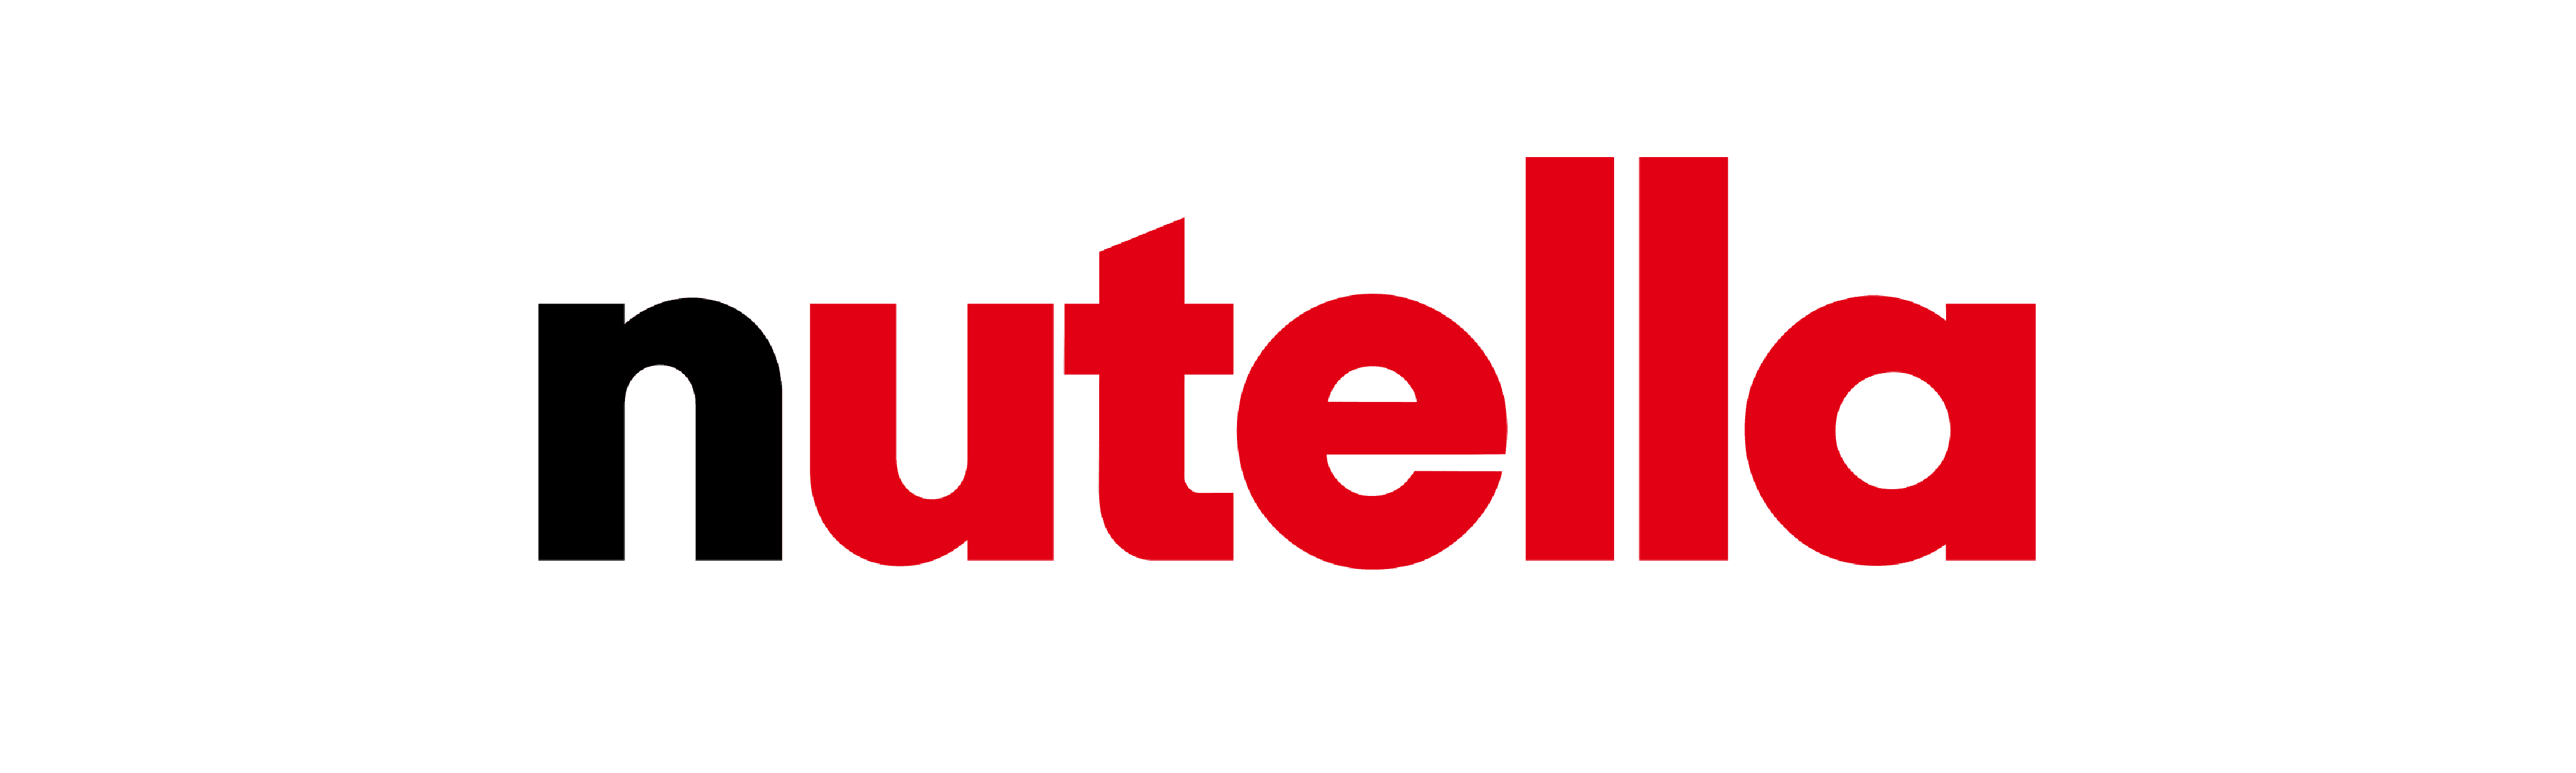 Décryptage du logo Nutella : iconique, intemporel et minimaliste